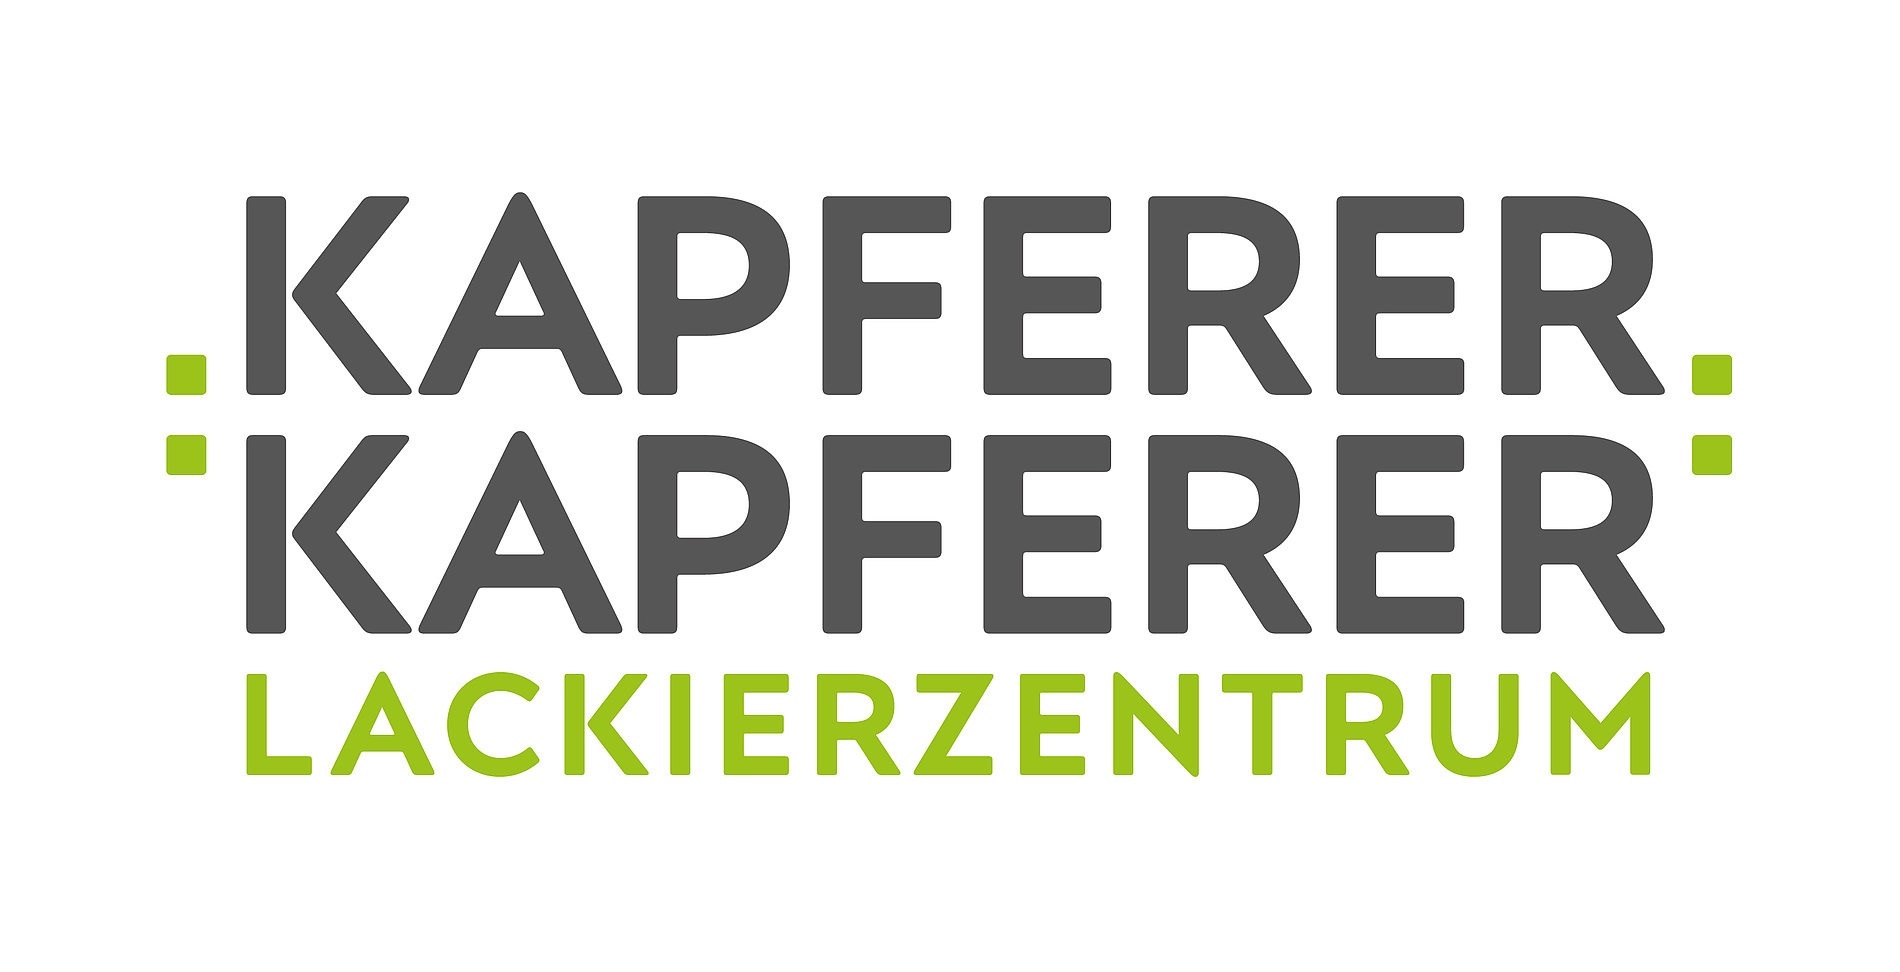 Lackierzentrum Kapferer und Kapferer Logo